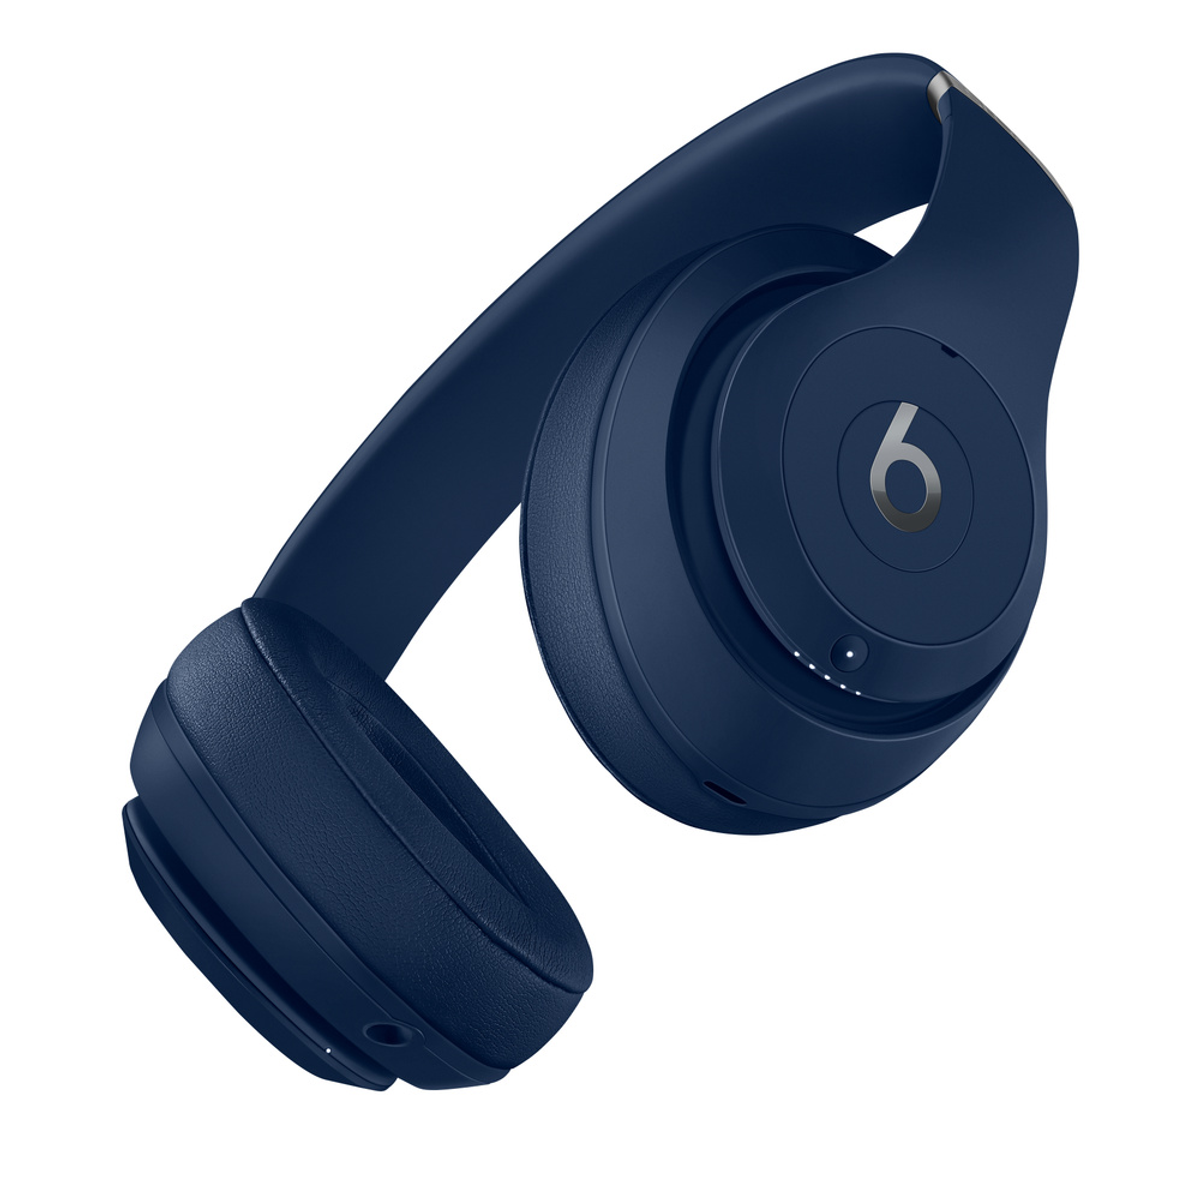 Bluetooth Blau Over-ear Studio3, BEATS Kopfhörer